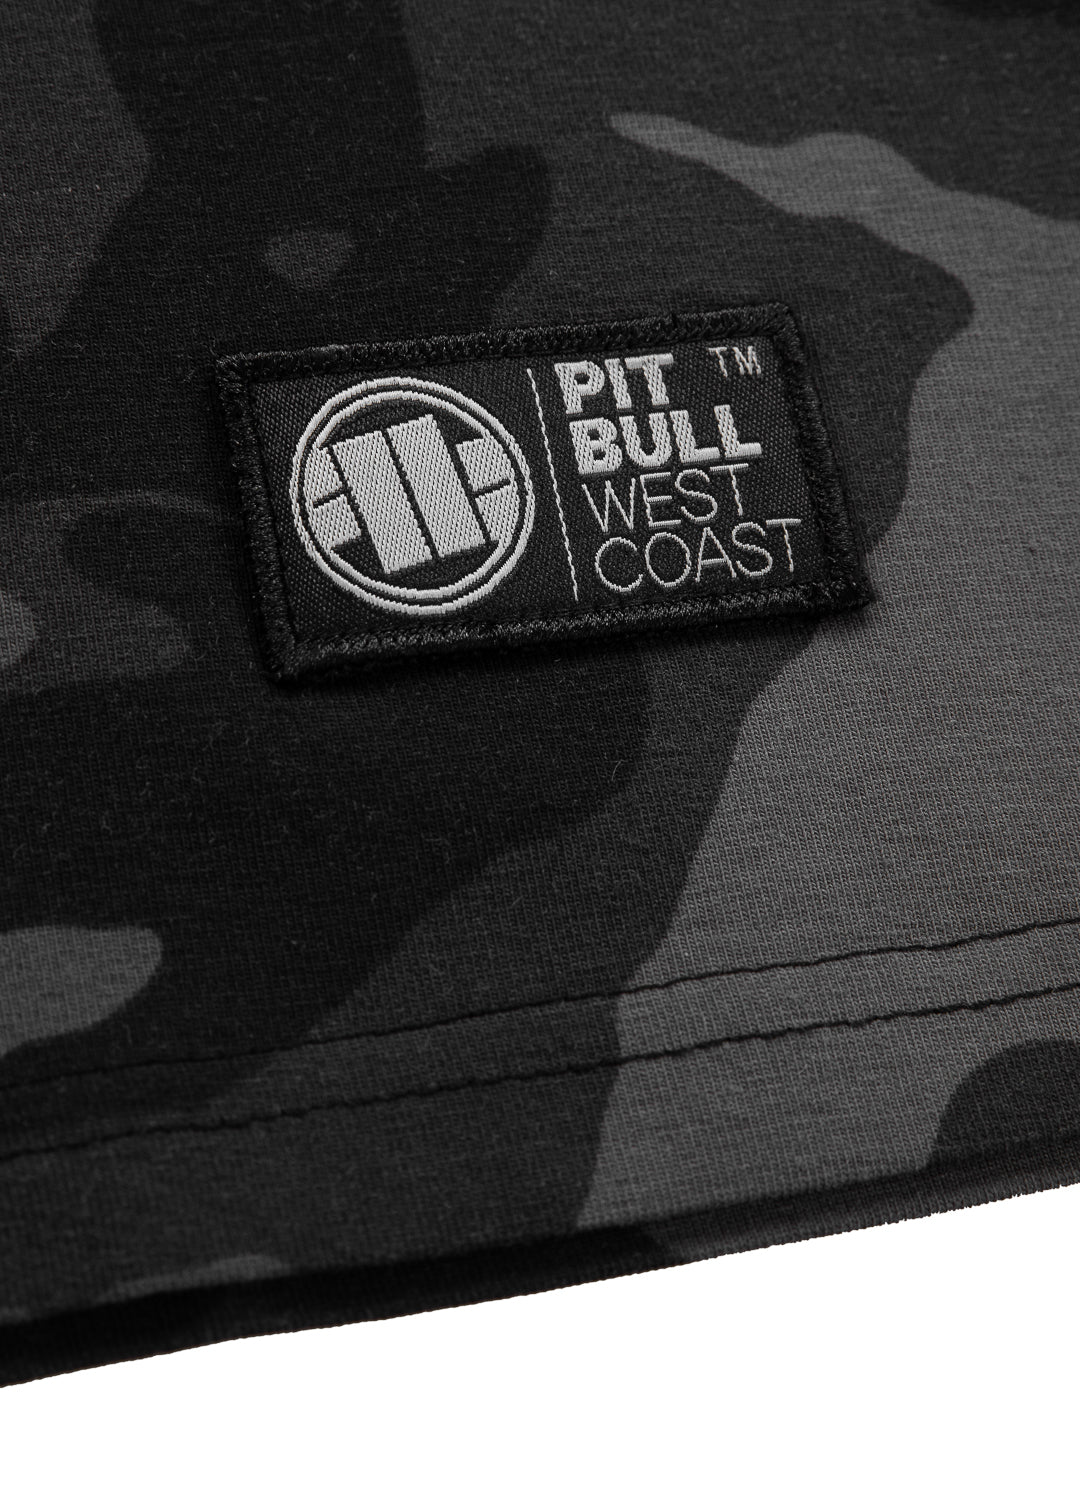 Tank Top Slim Fit Small Logo All Black Camo - Pitbull West Coast International Store 